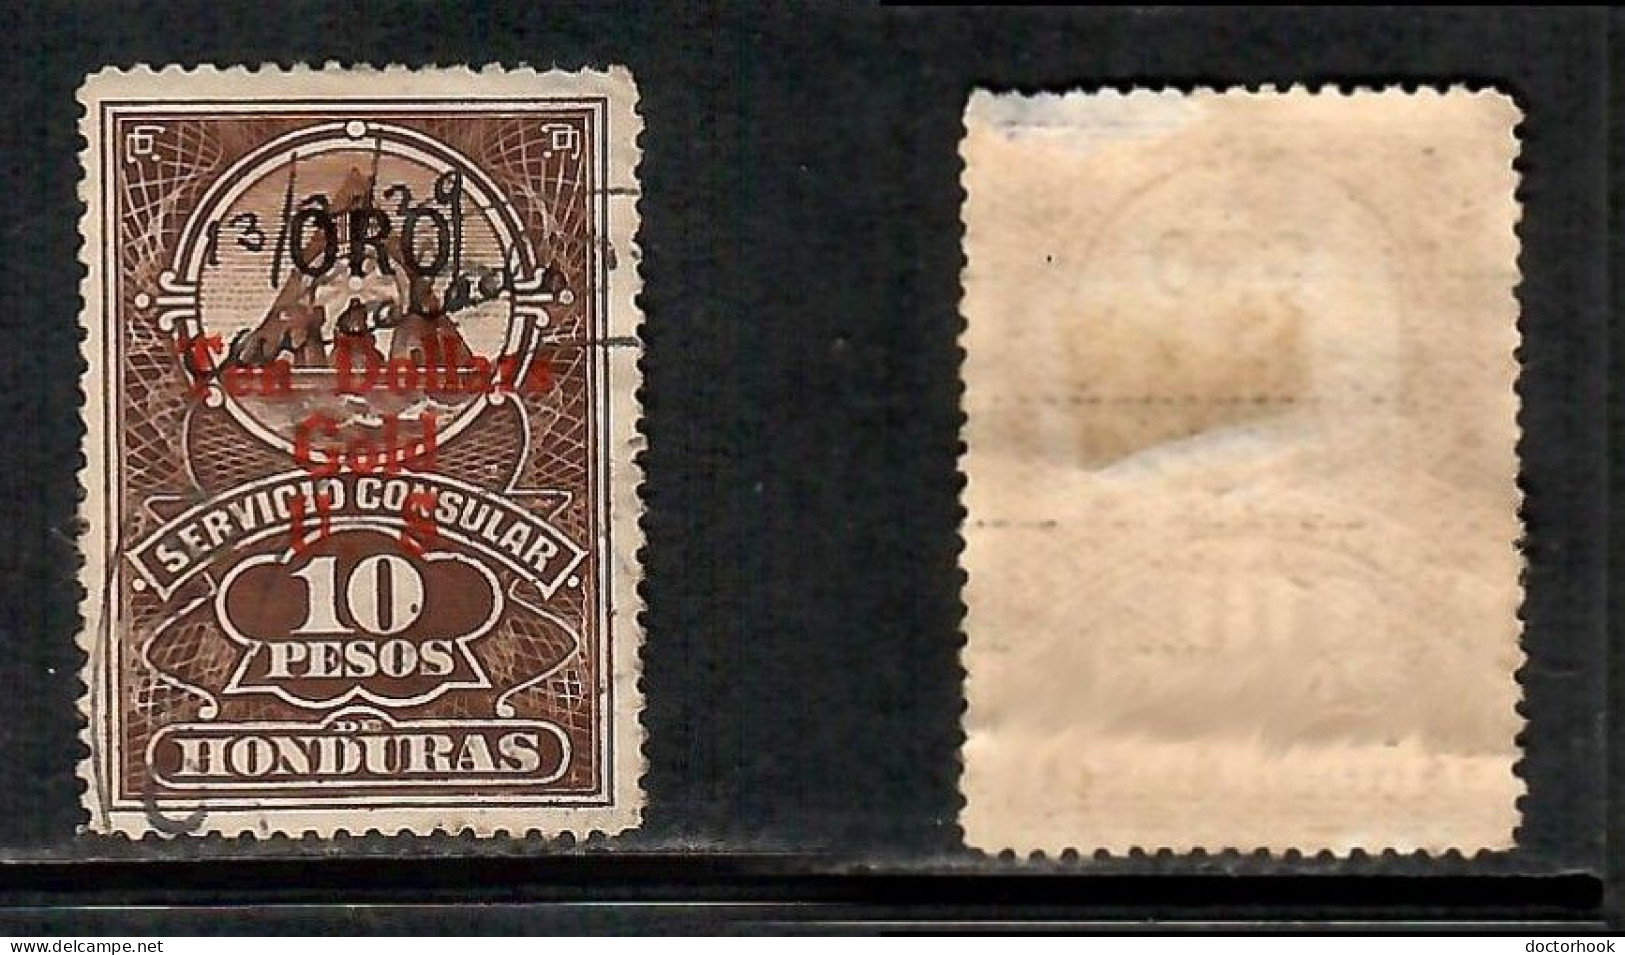 HONDURAS   10 PESO CONSULAR STAMP ($10 DOLLARS GOLD U.S. Opt.) USED (CONDITION PER SCAN) (Stamp Scan # 1035-8) - Honduras